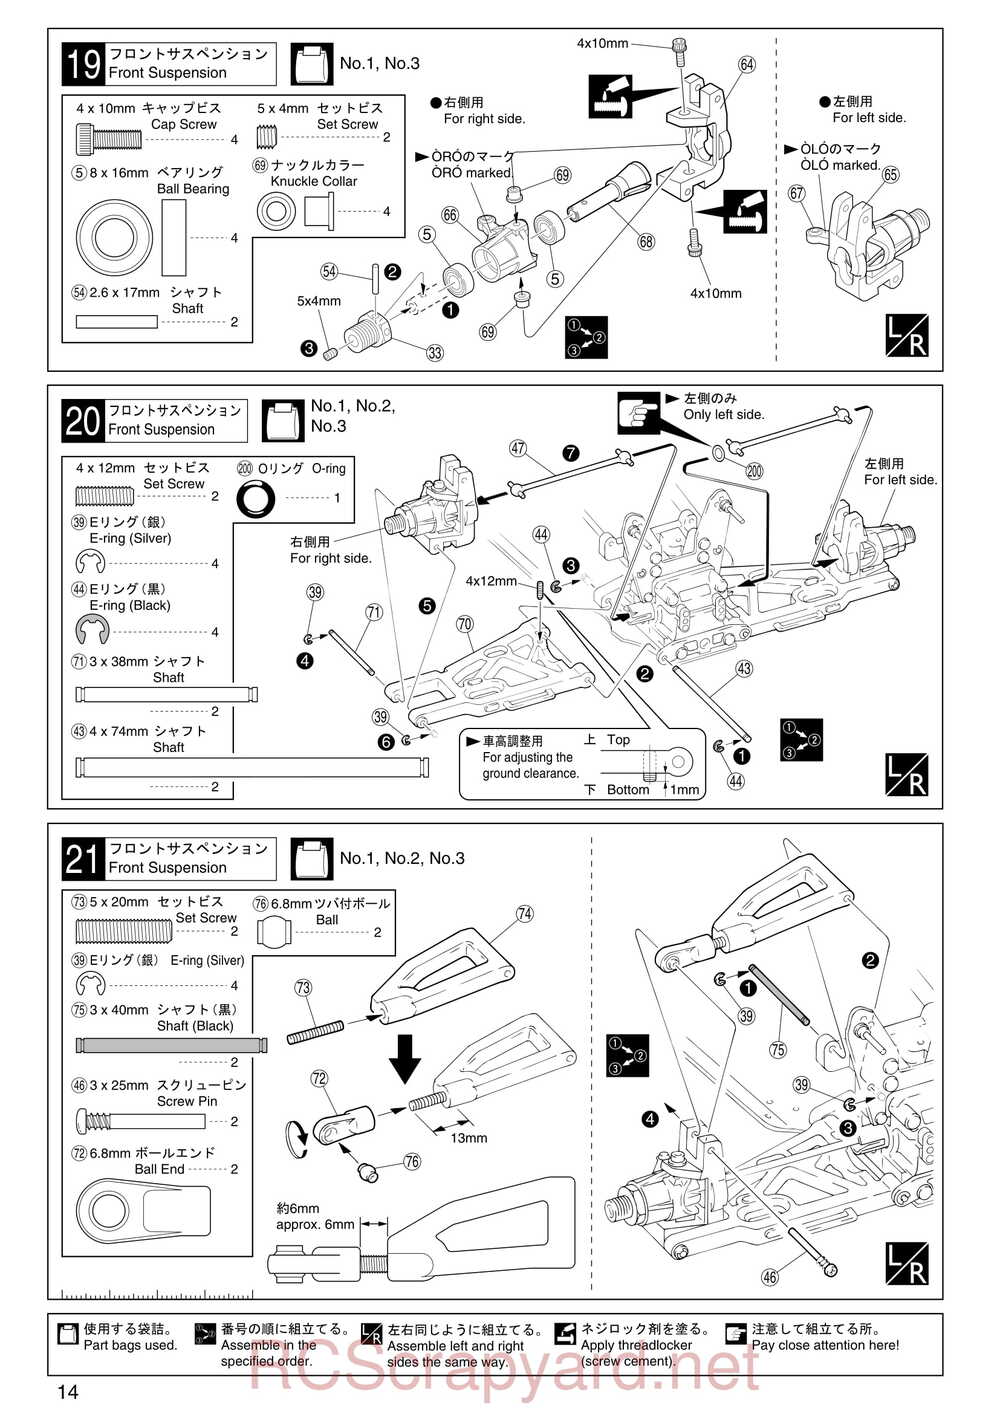 Kyosho - 31192 - Inferno-MP-7-5 Sports - Manual - Page 14